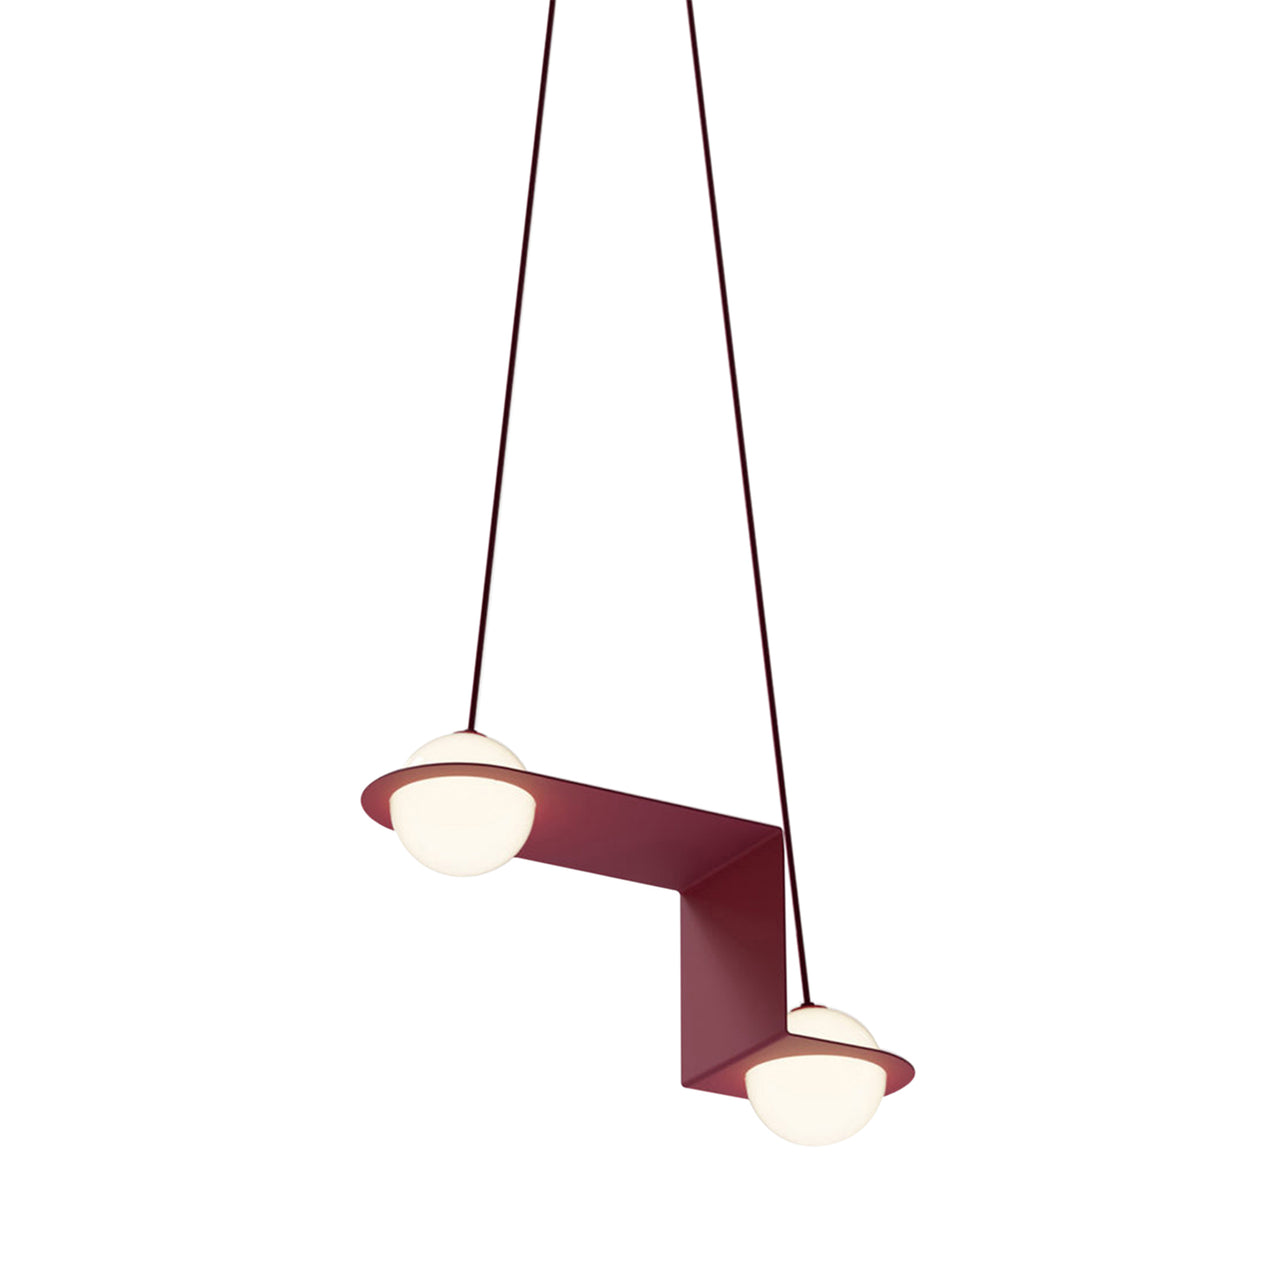 Laurent 06 Suspension Lamp: Burgundy + Burgundy + Angled Wires